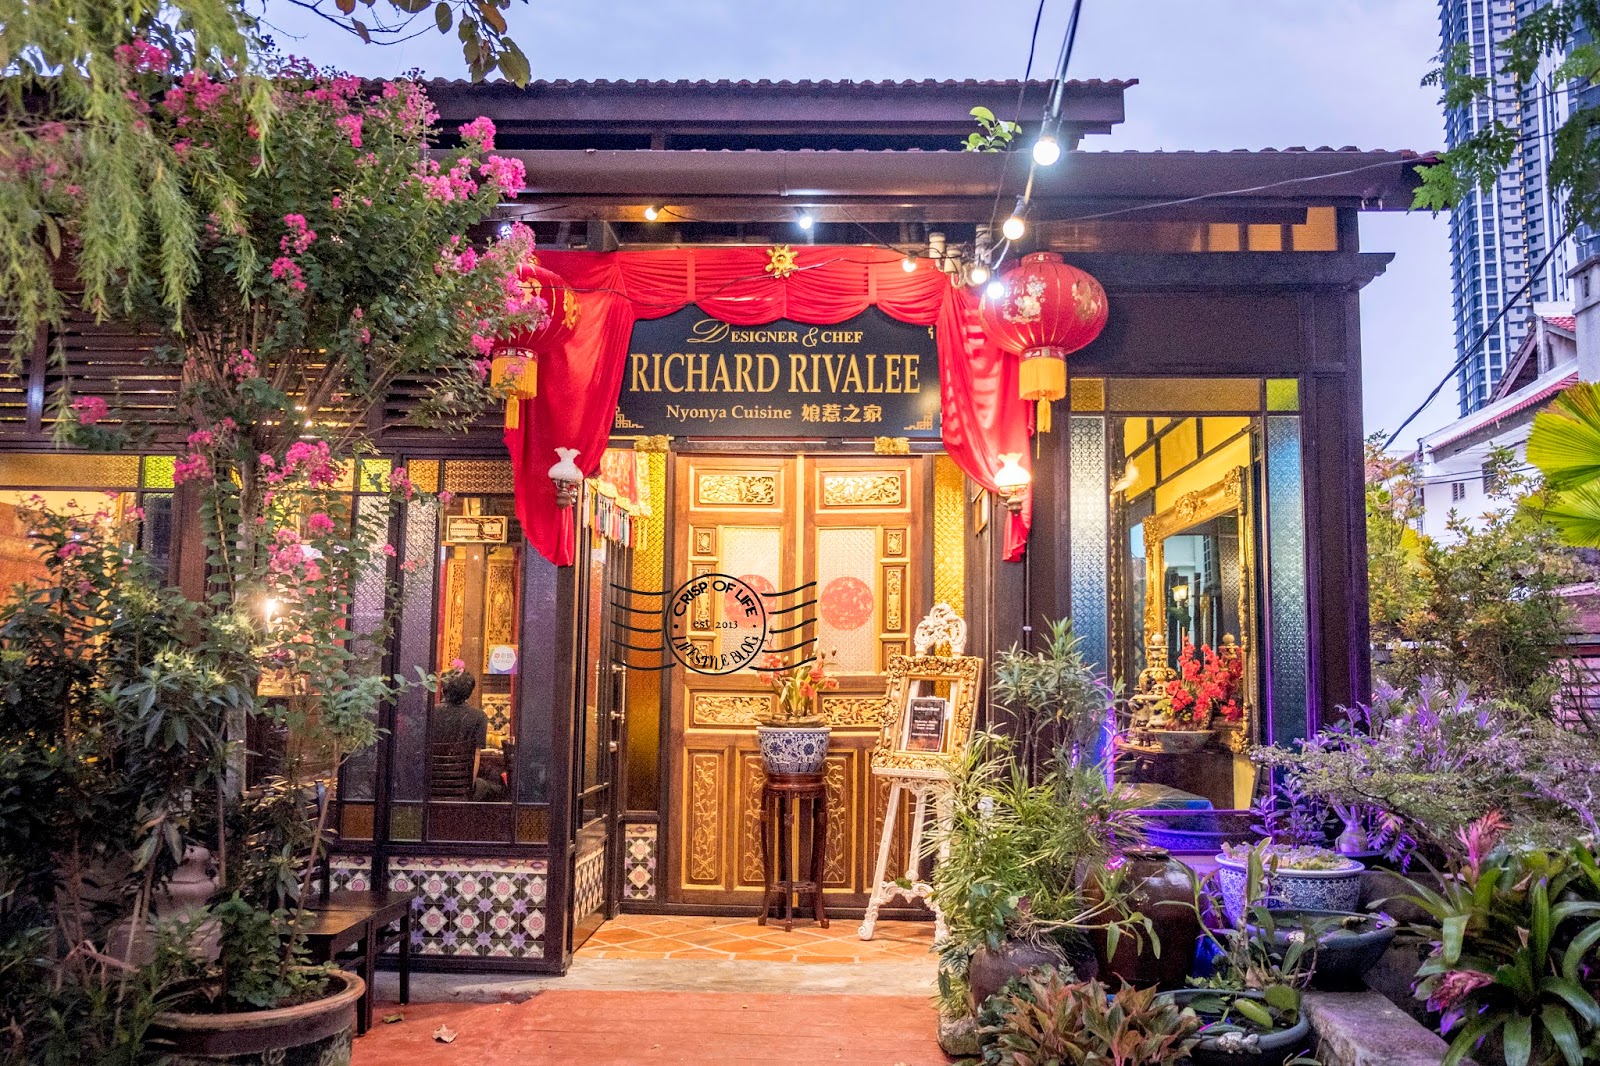 Richard Rivalee Nyonya Cuisine 娘惹之家 @ Rain Garden Hotel, Lebuh Burmah, Penang